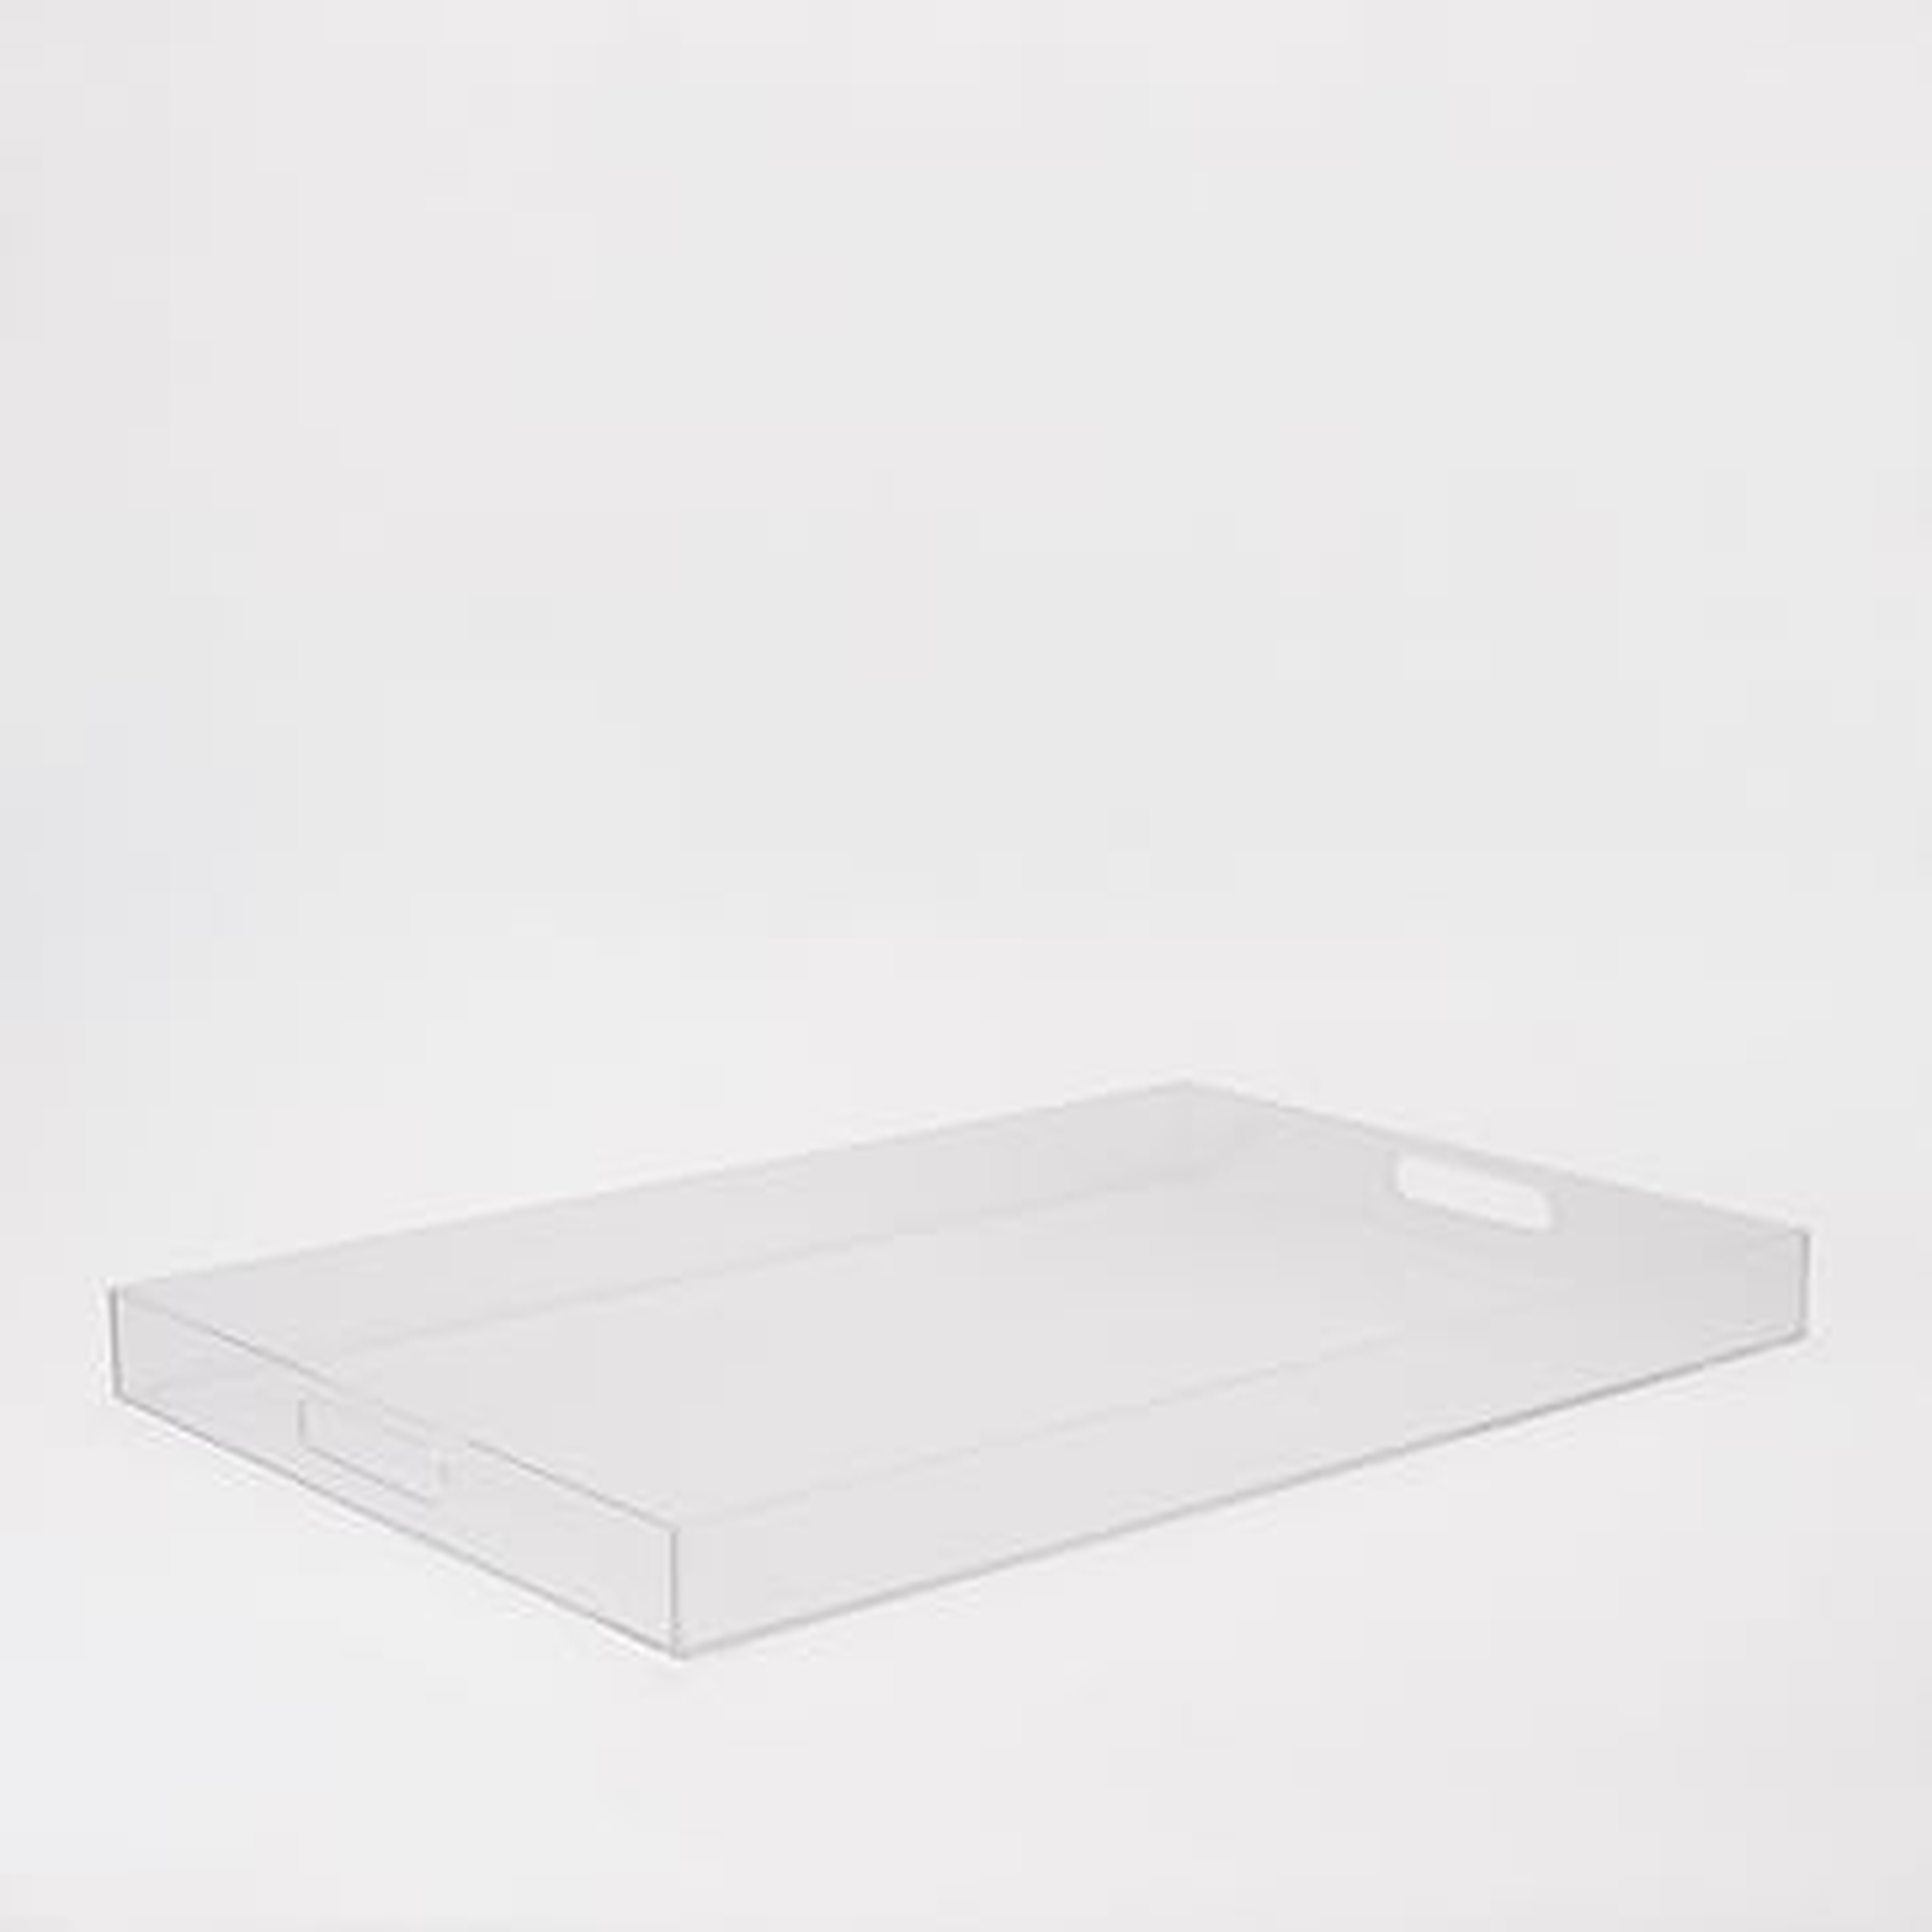 Acrylic Tray, Clear, 18"x28" - West Elm